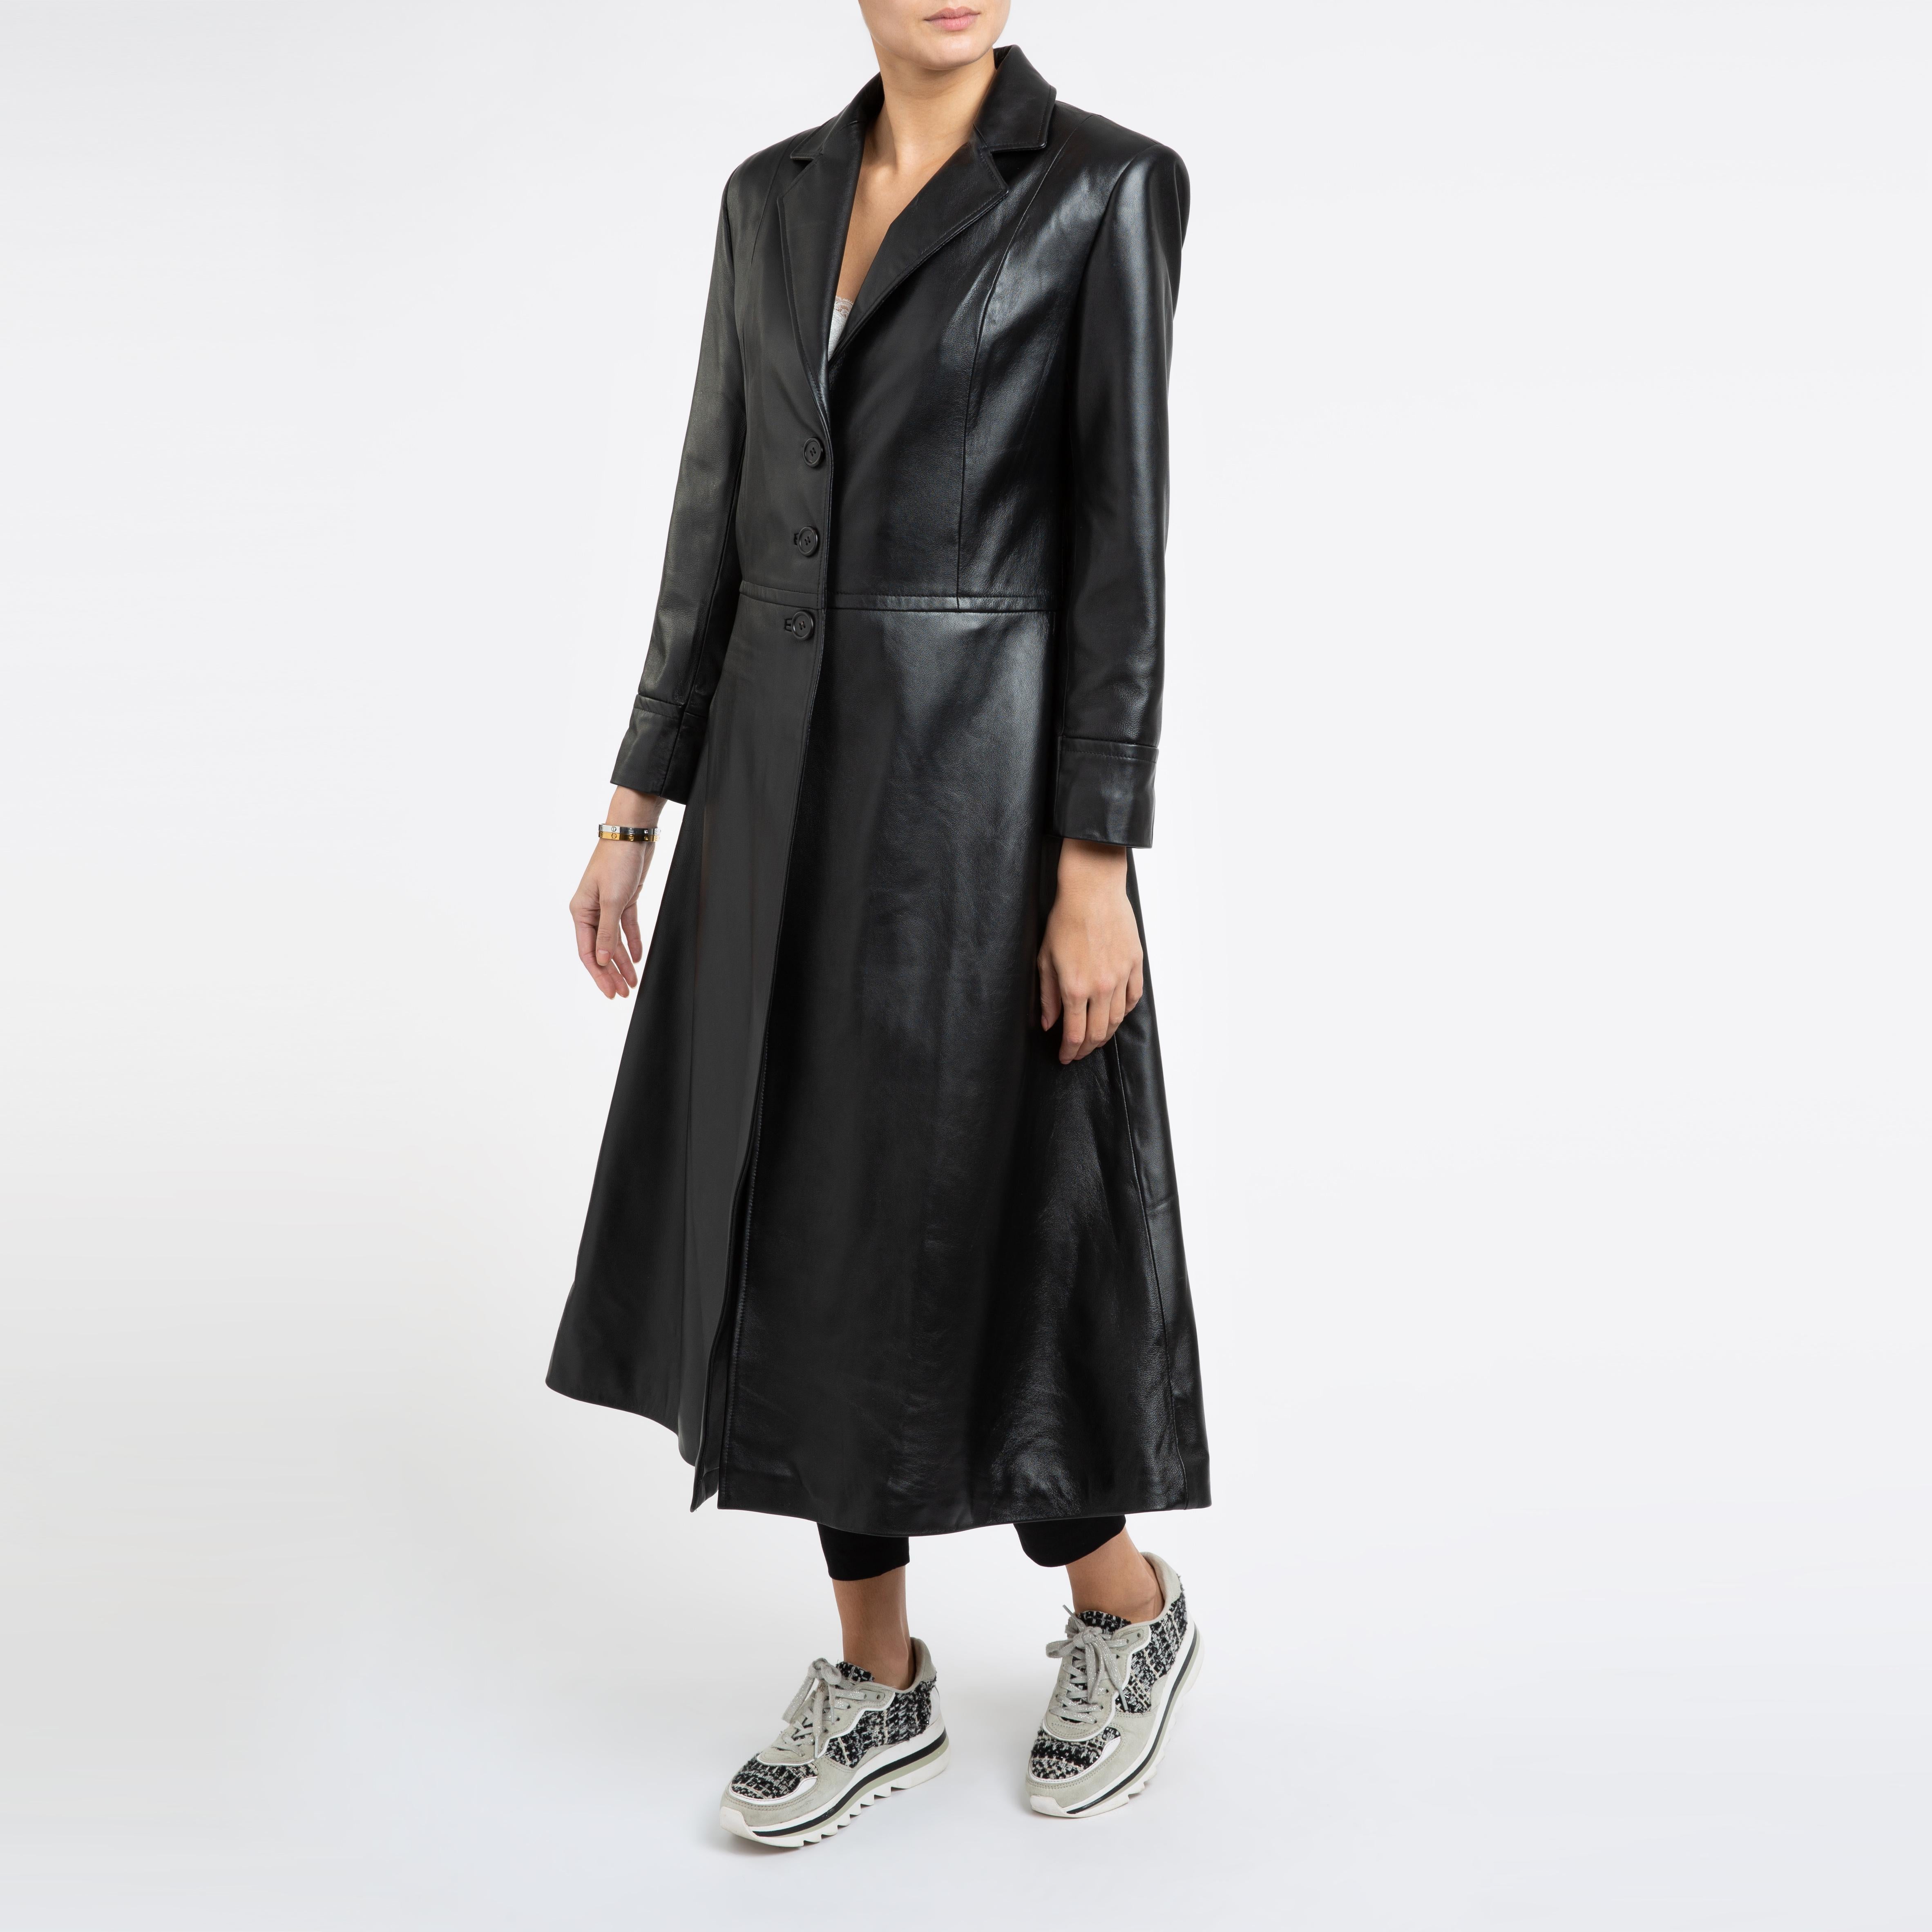 Verheyen London Oversize 70's Leather Trench Coat in Black - Size uk 10 For Sale 4